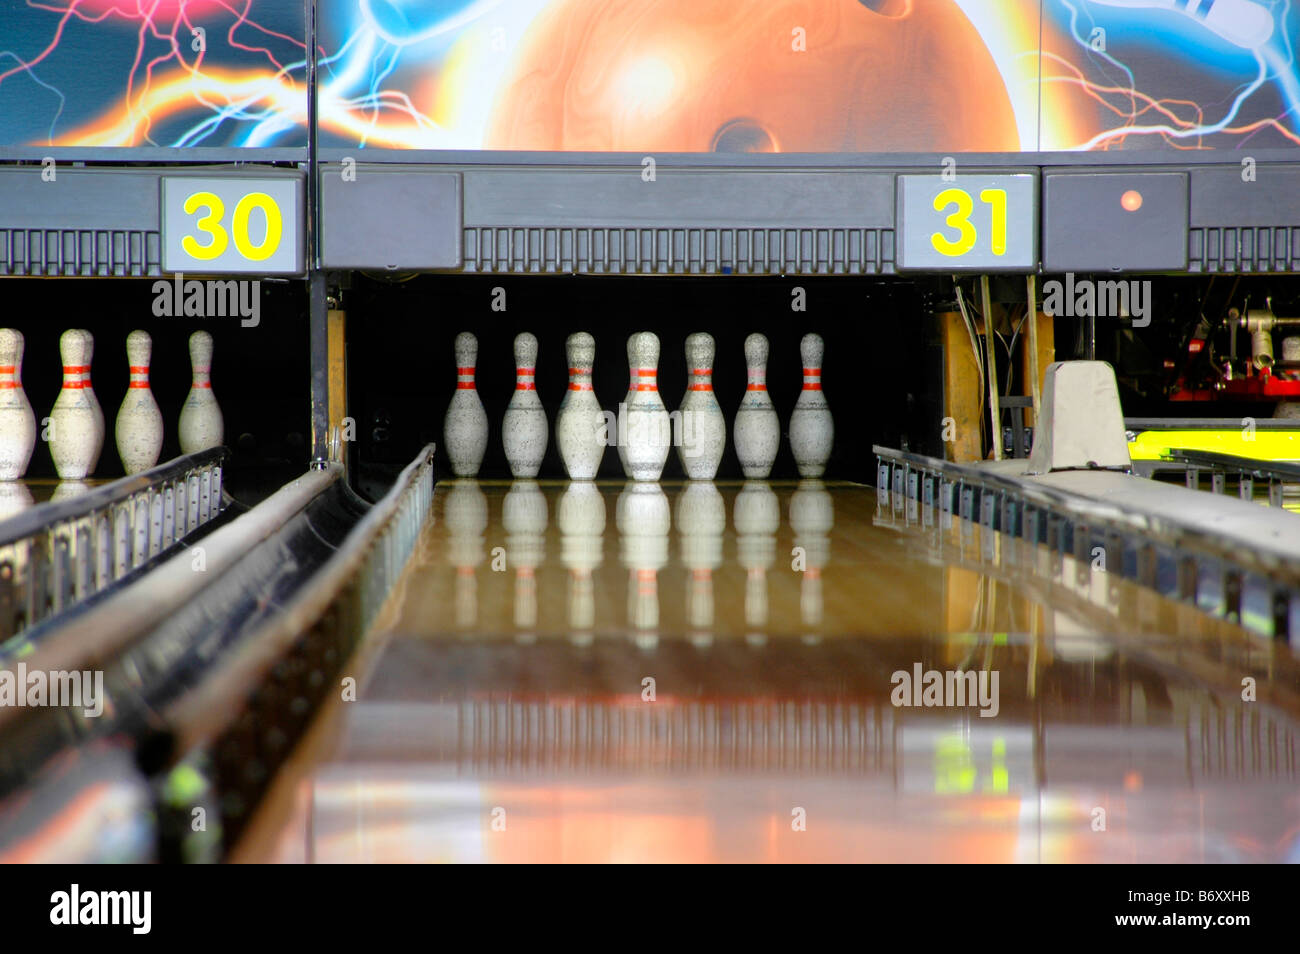 A set of ten pin bowling skittles and lane. Stock Photo